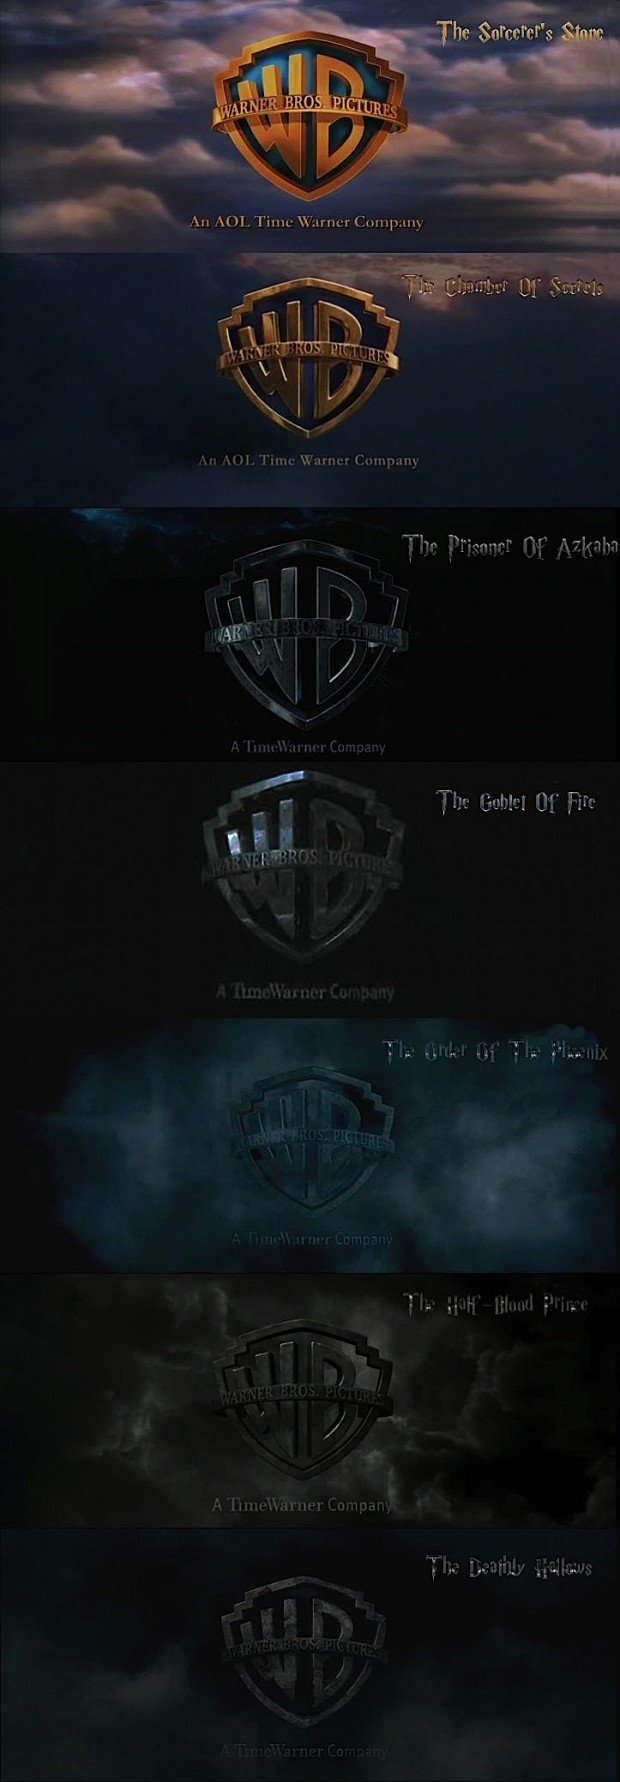 Harry Potter progression of scary.